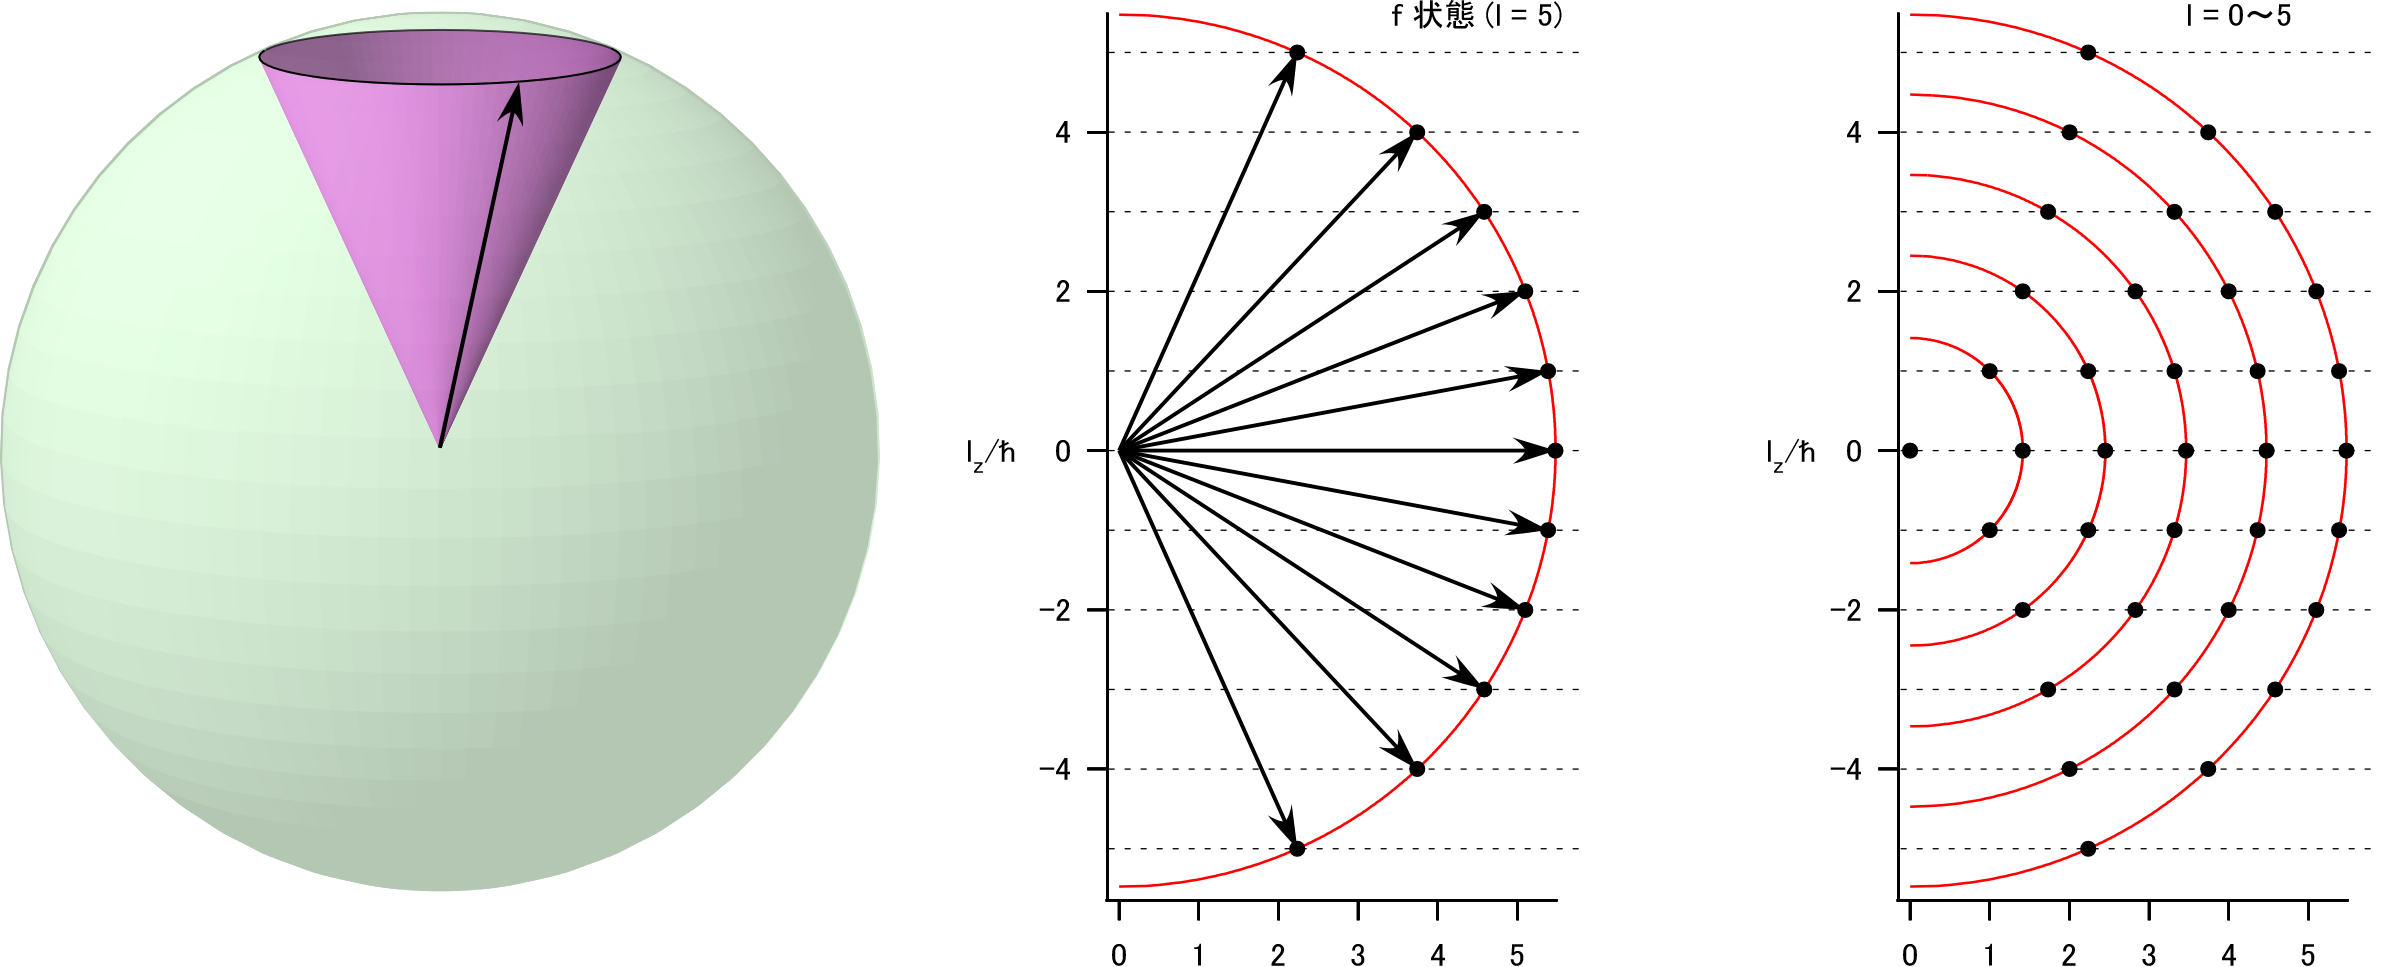 spherical-harmonics-angular-momentum.png